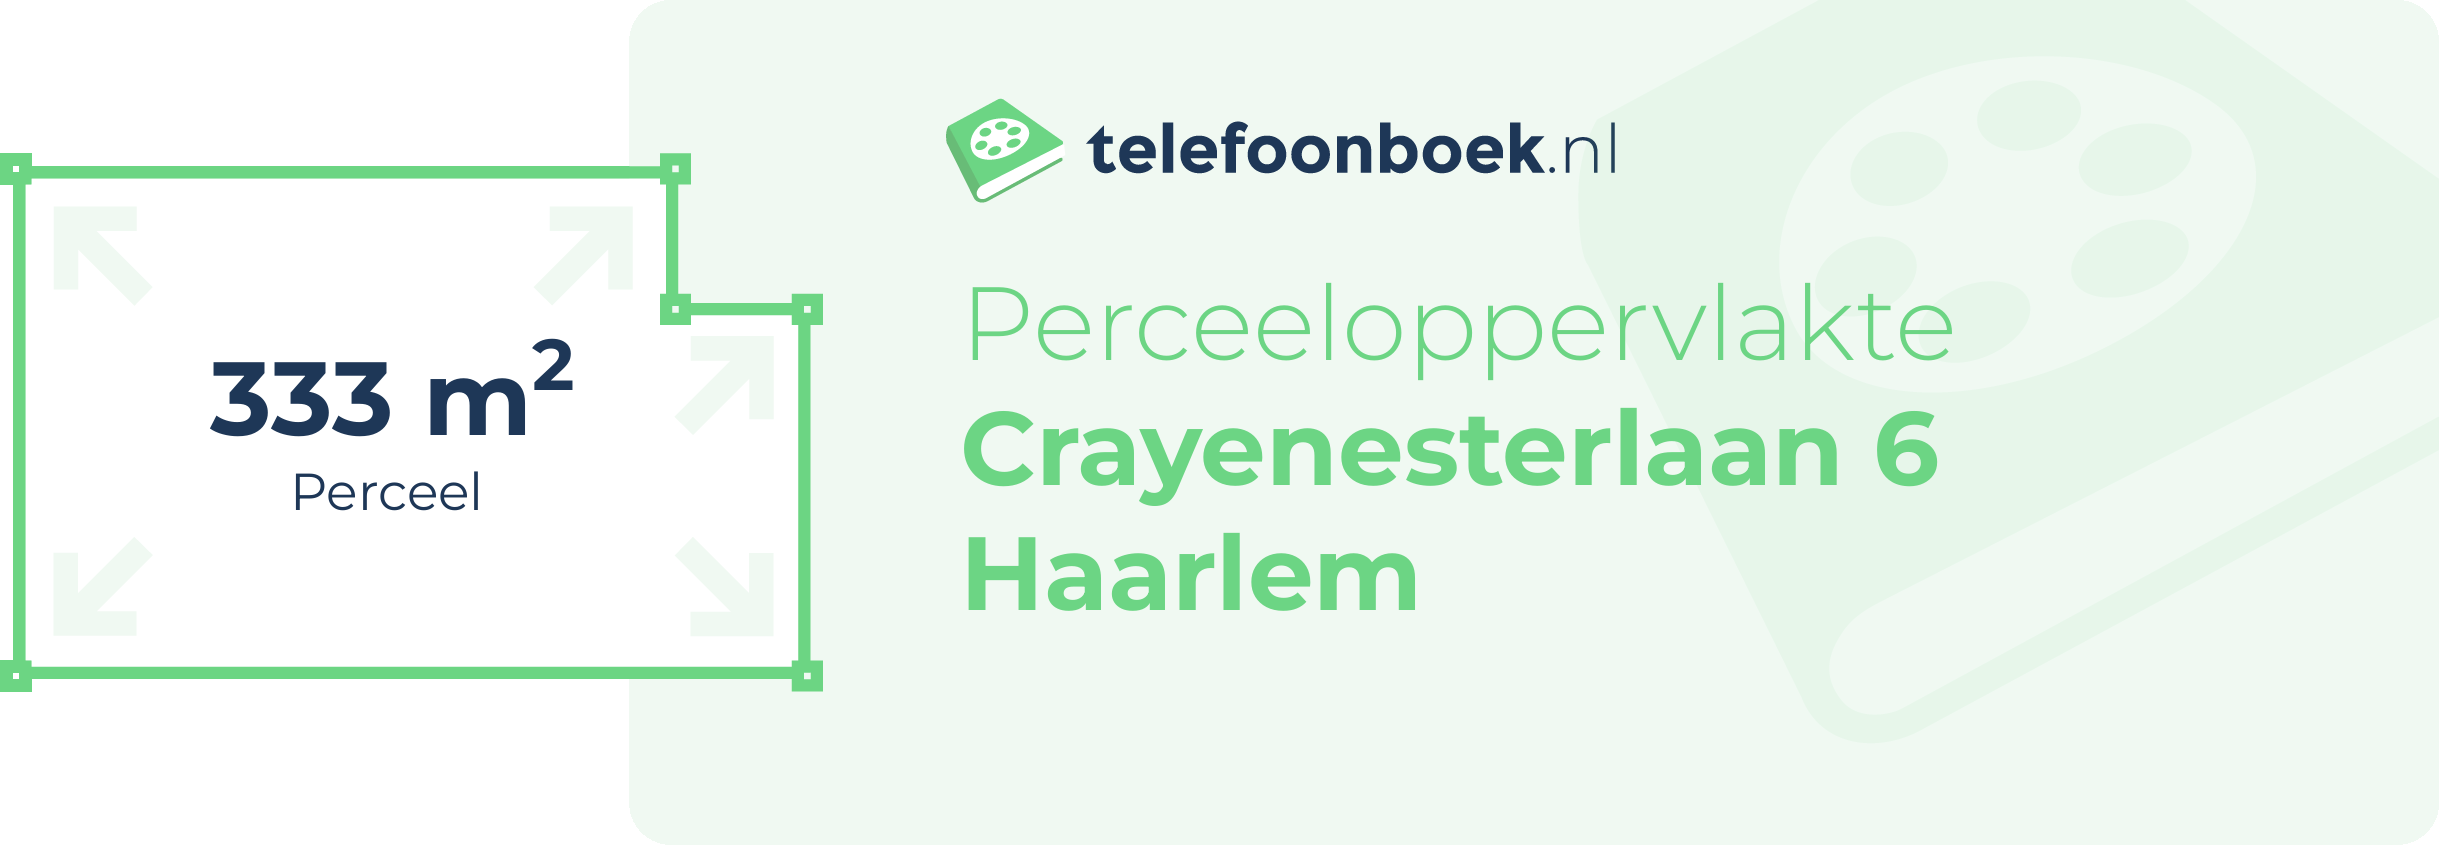 Perceeloppervlakte Crayenesterlaan 6 Haarlem